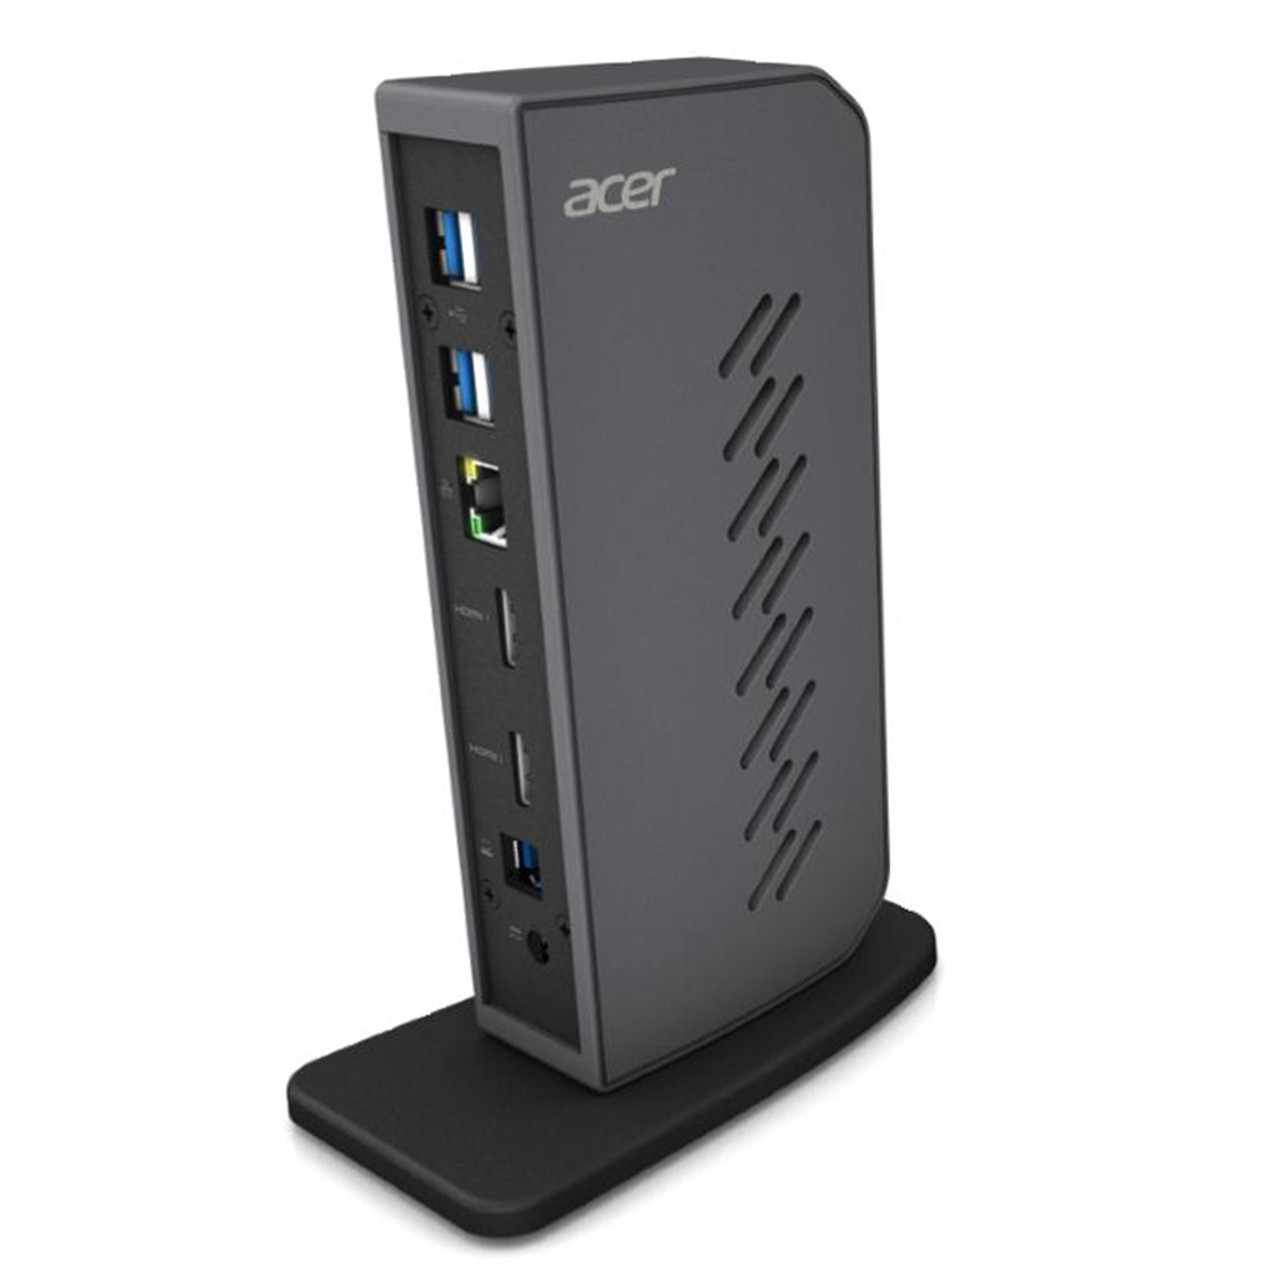 Acer USB 3.0 Dock II - Docking Station RJ-45 Headphone